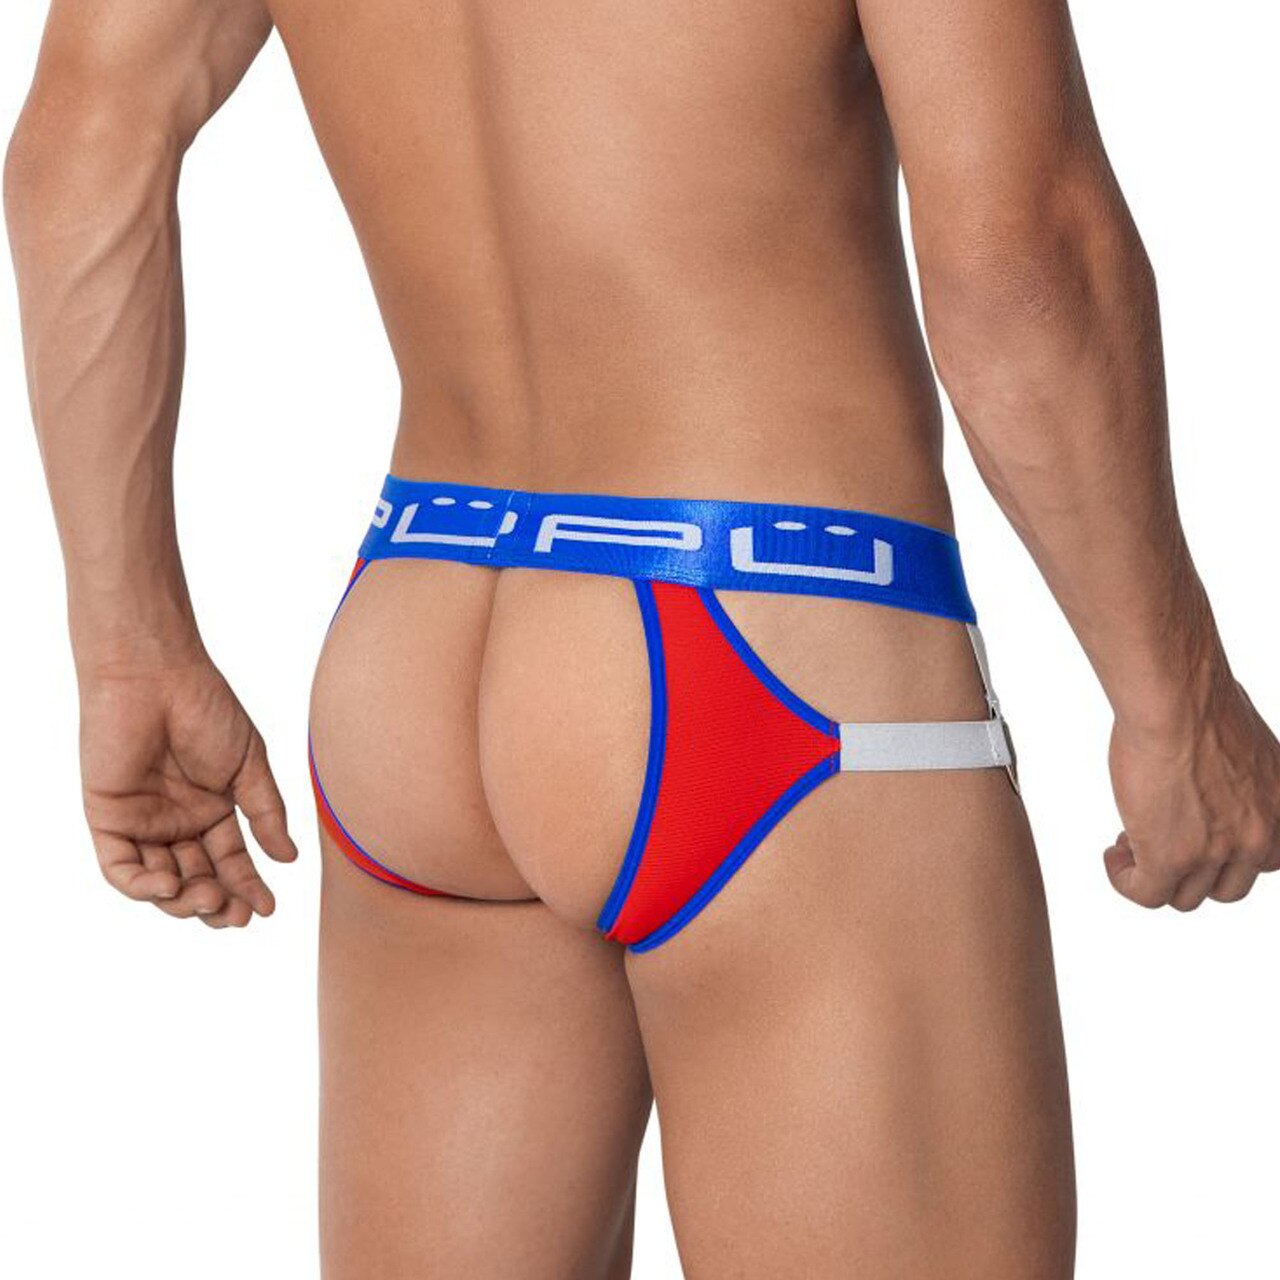 SALE - Mens PPU Underwear Strap Jock Strap with Metal Rings Red